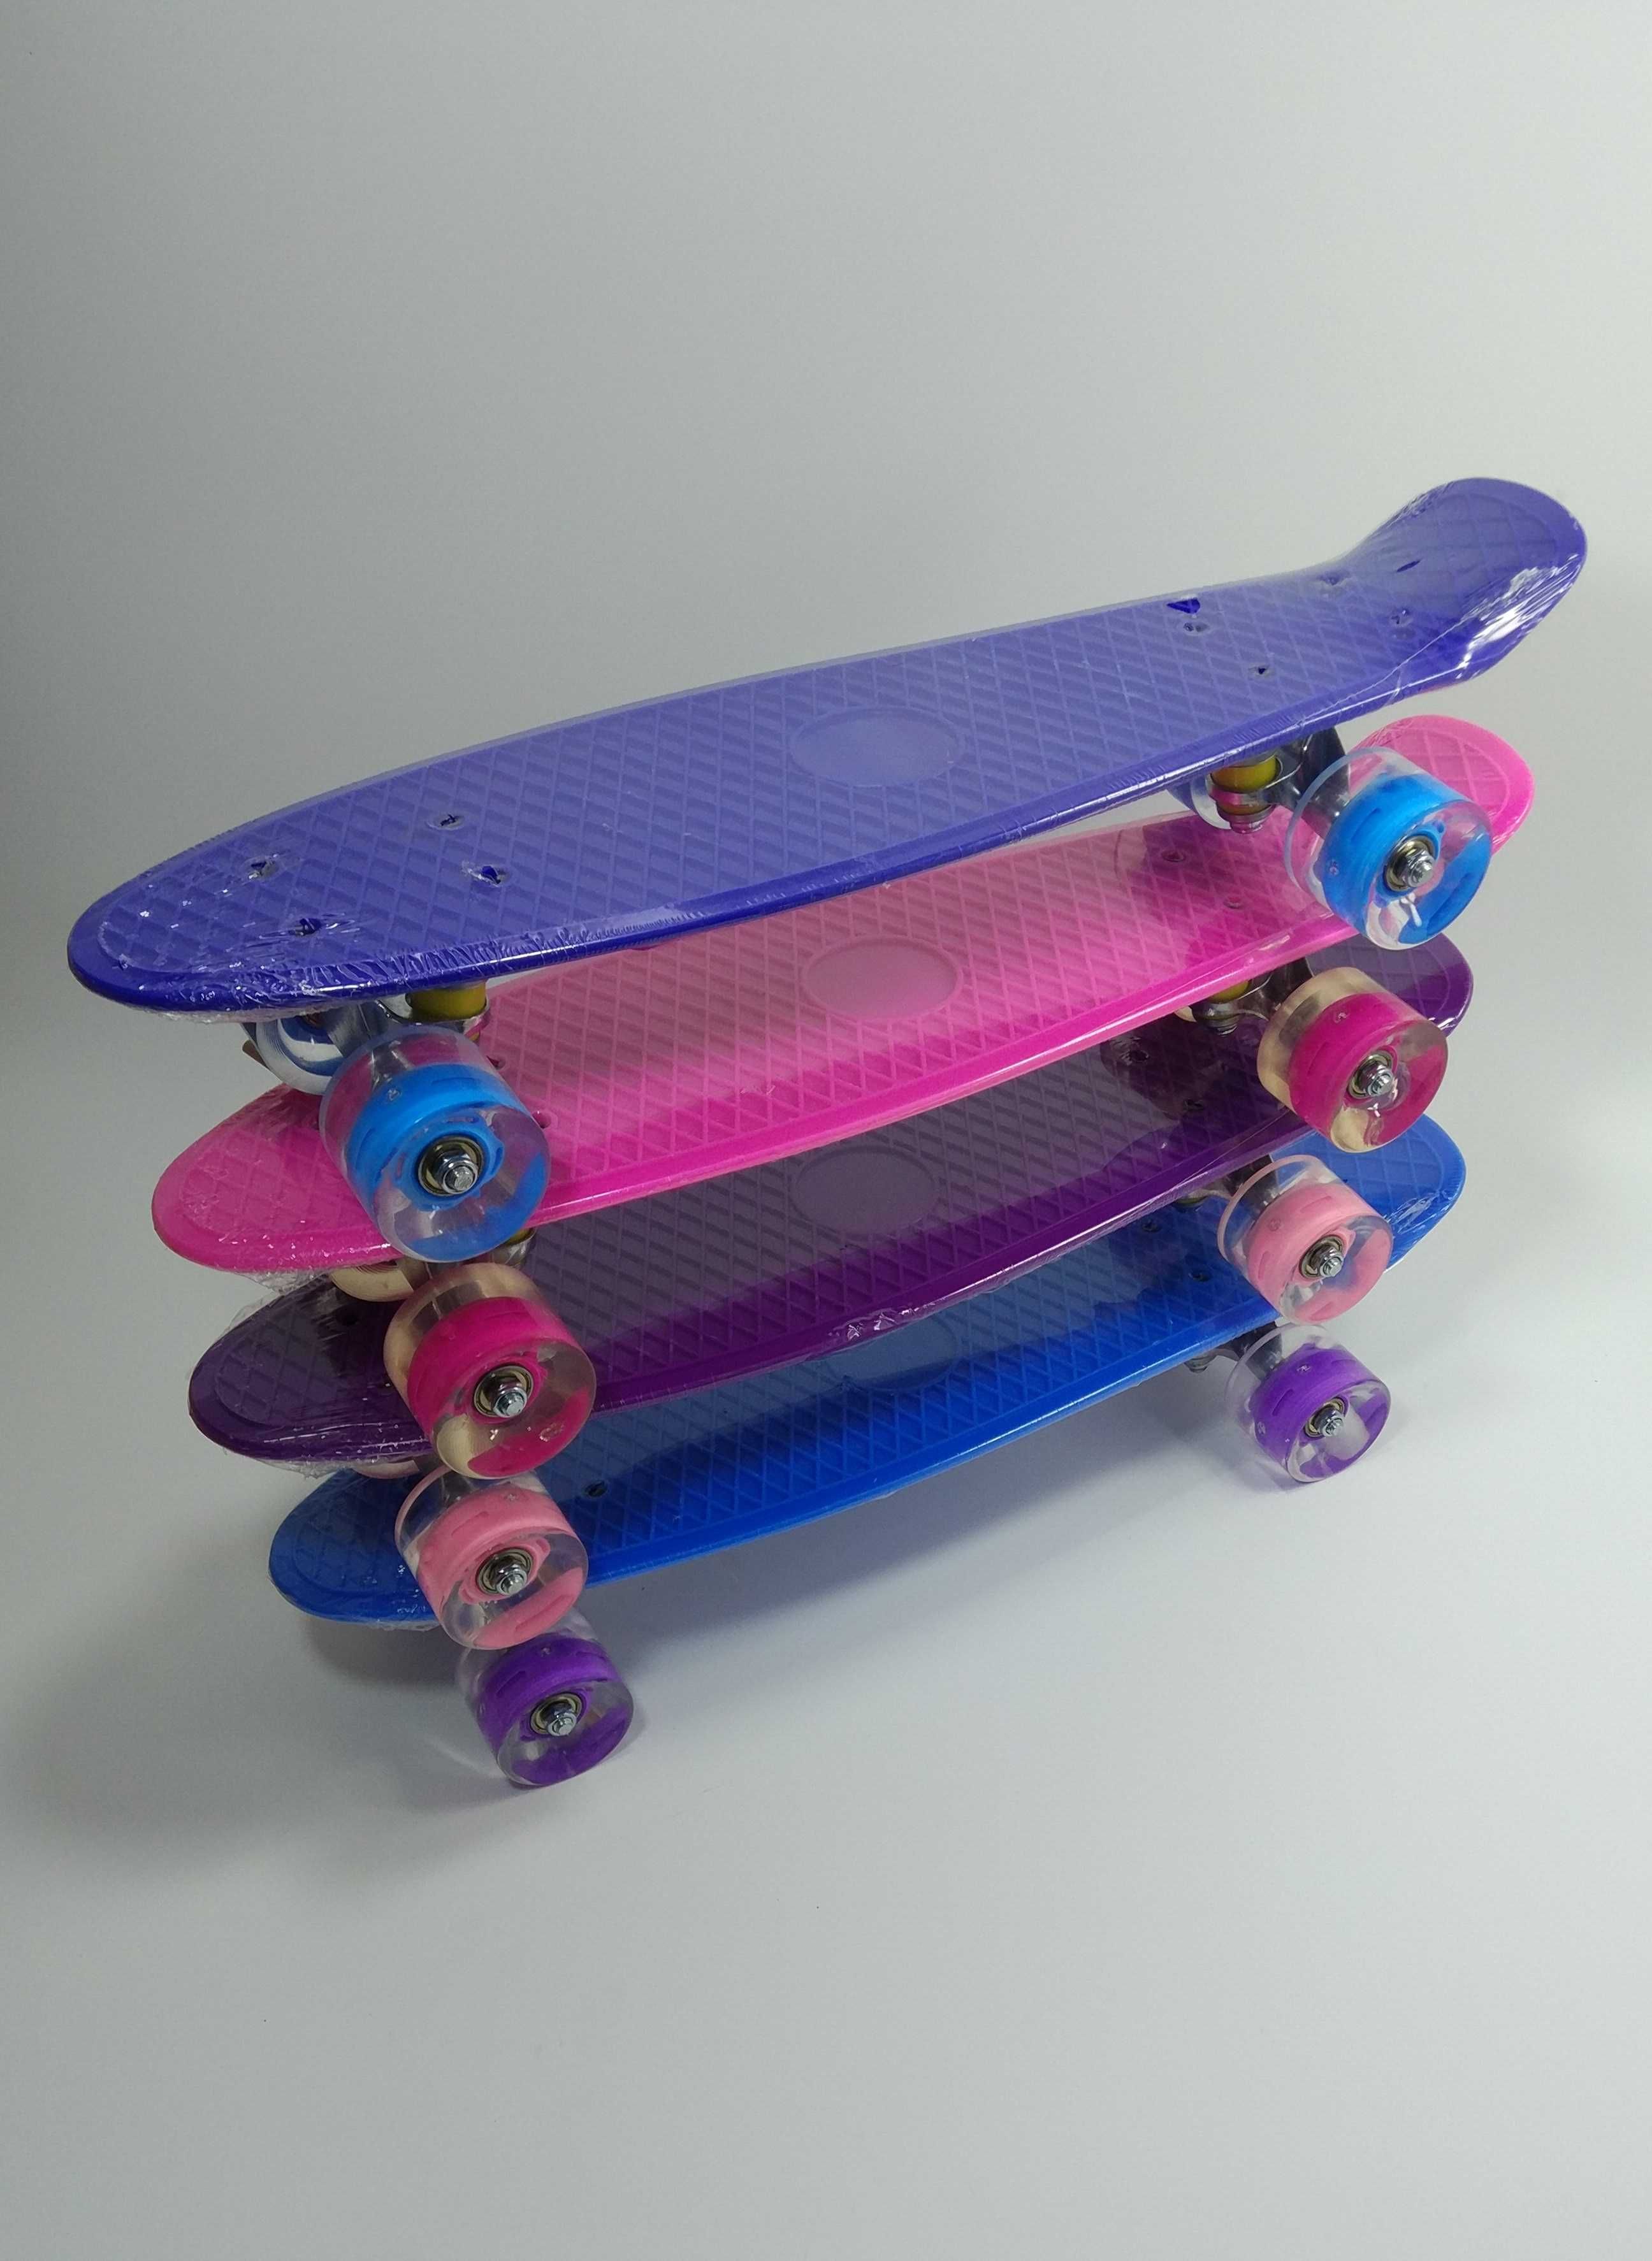 Розови цикламени светещи пениборди скейтборд penny board / пениборд